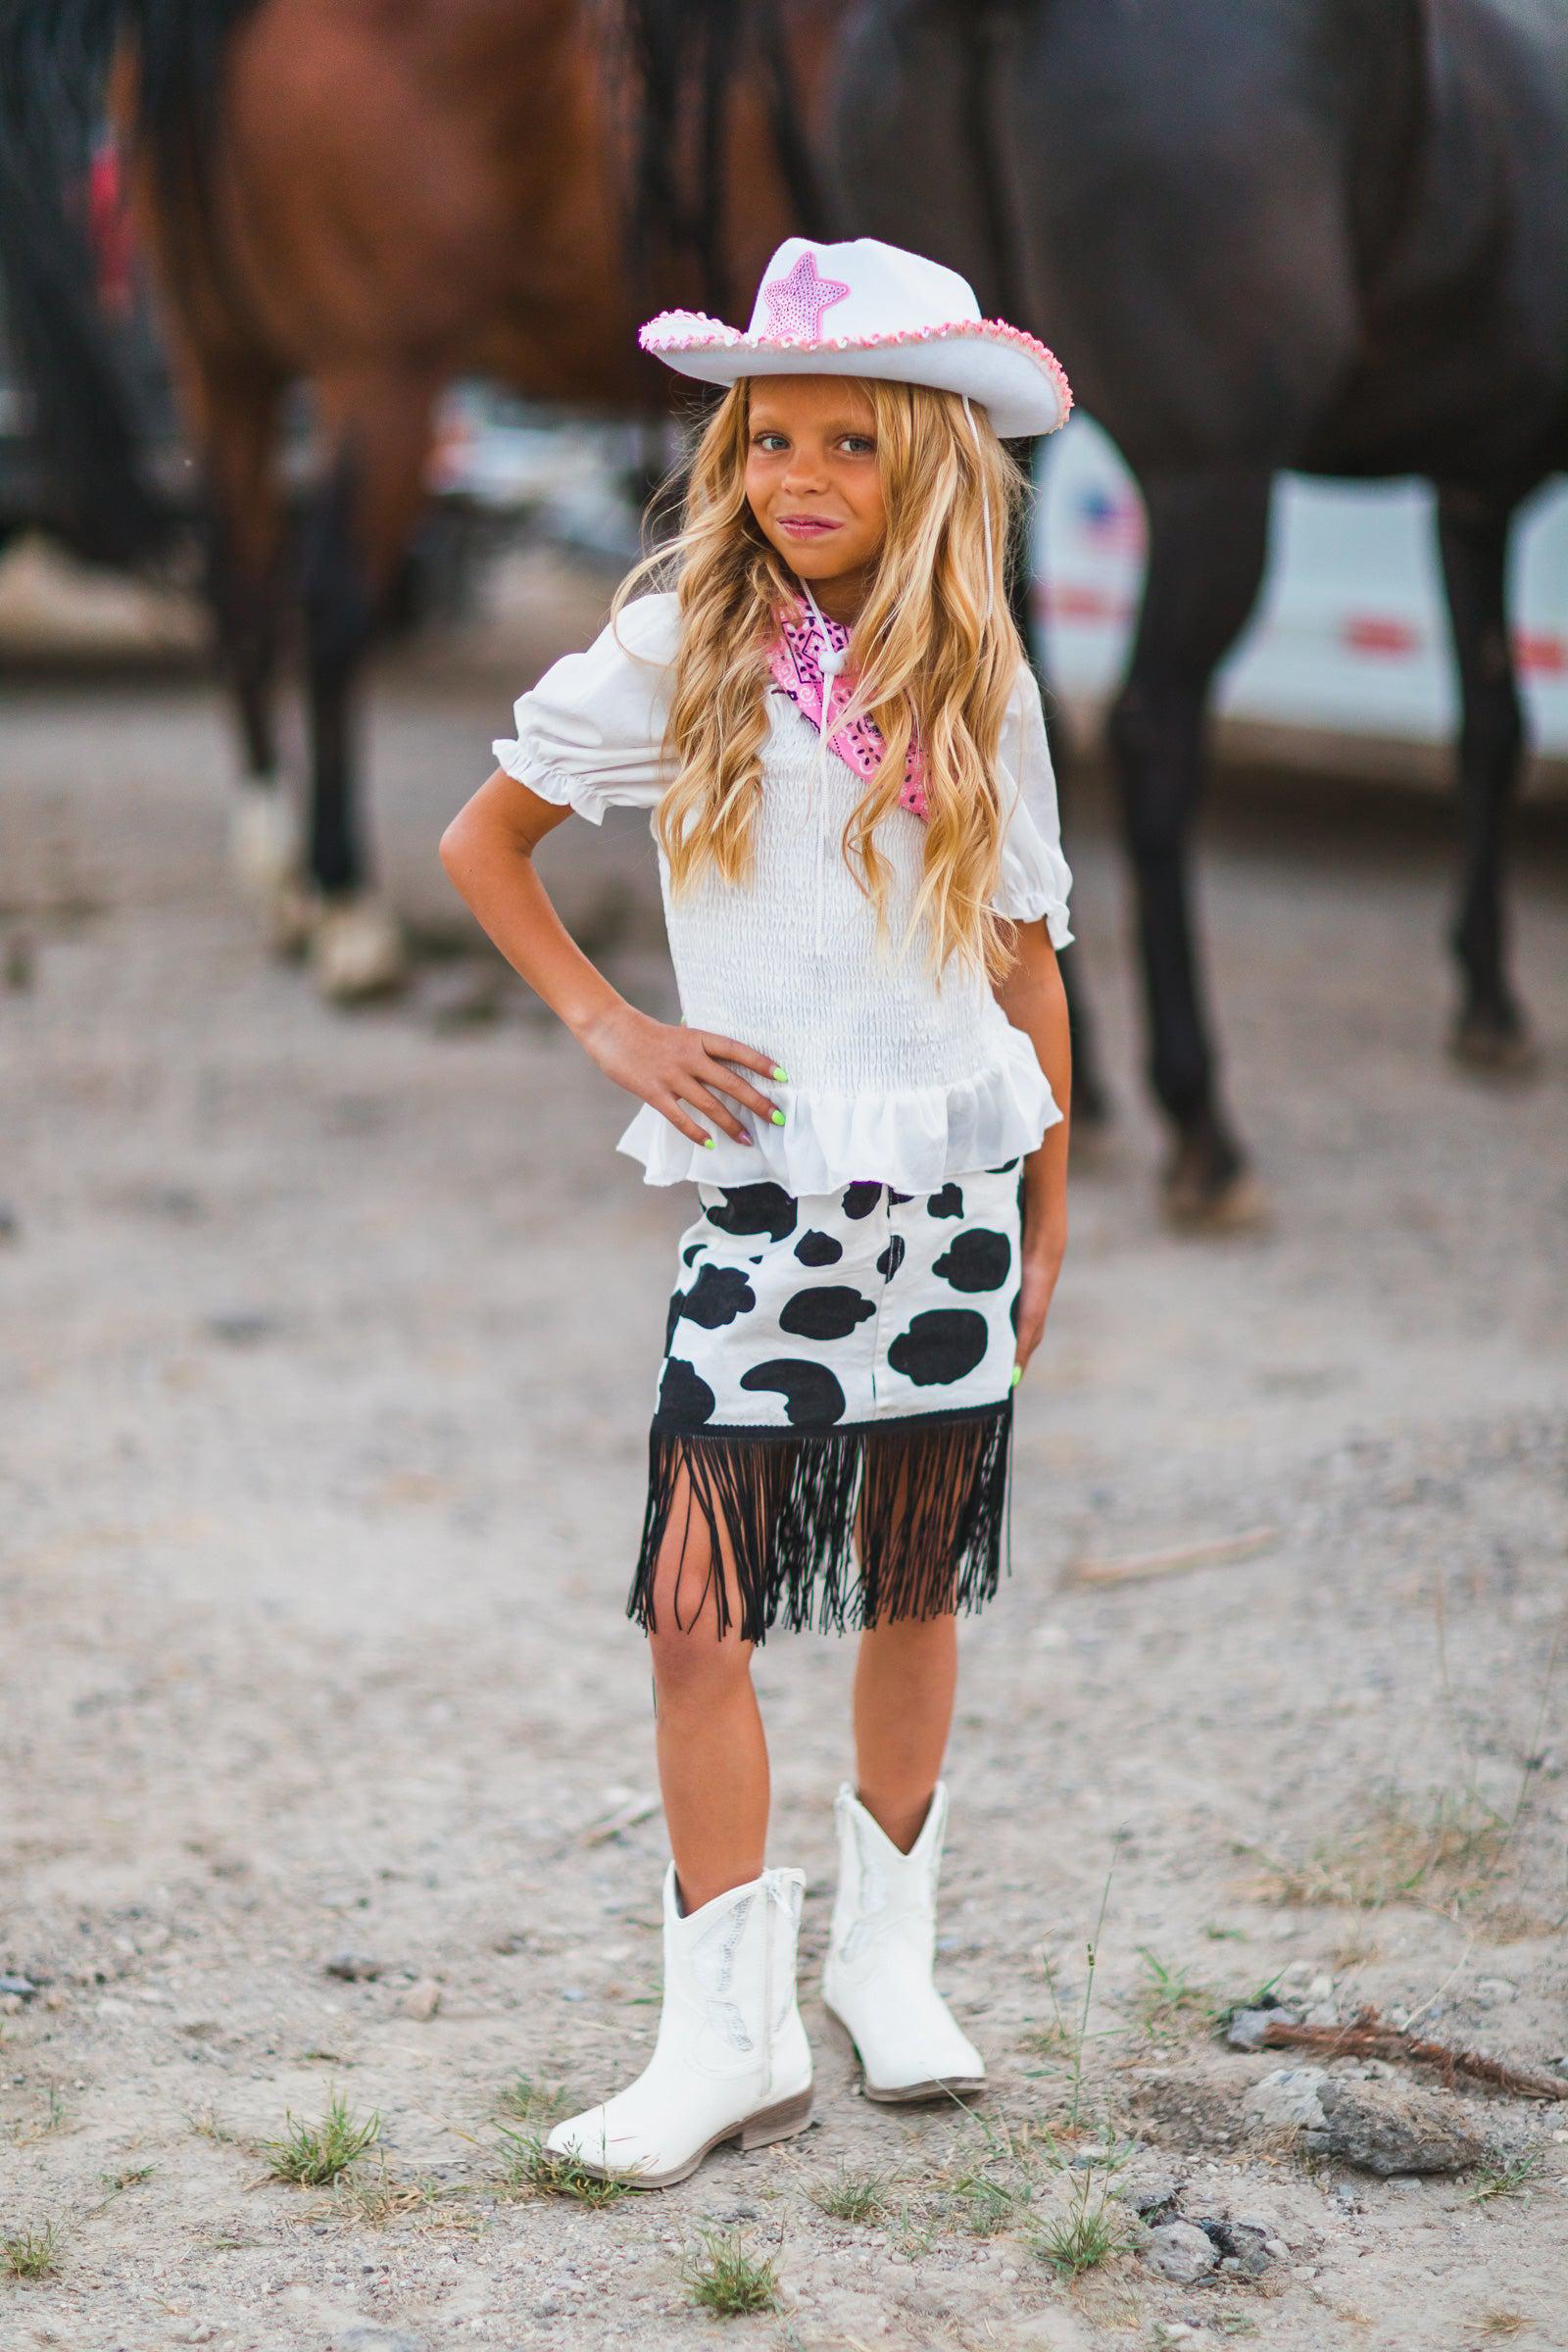 Lasso'n Cowgirl Girl's Costume